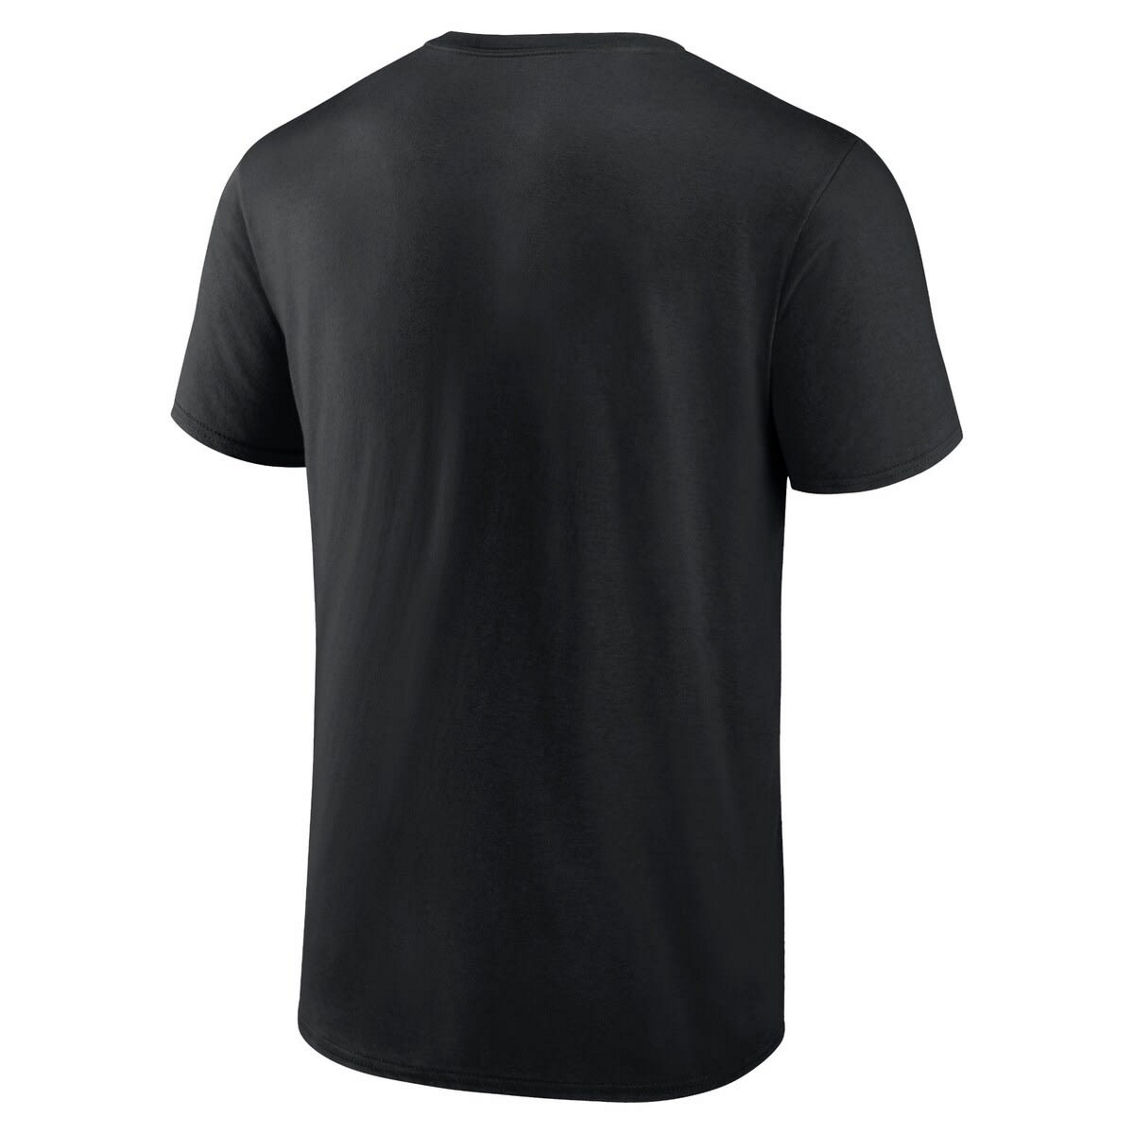 Fanatics Branded Men's Black Boston Celtics Match Up T-Shirt - Image 4 of 4